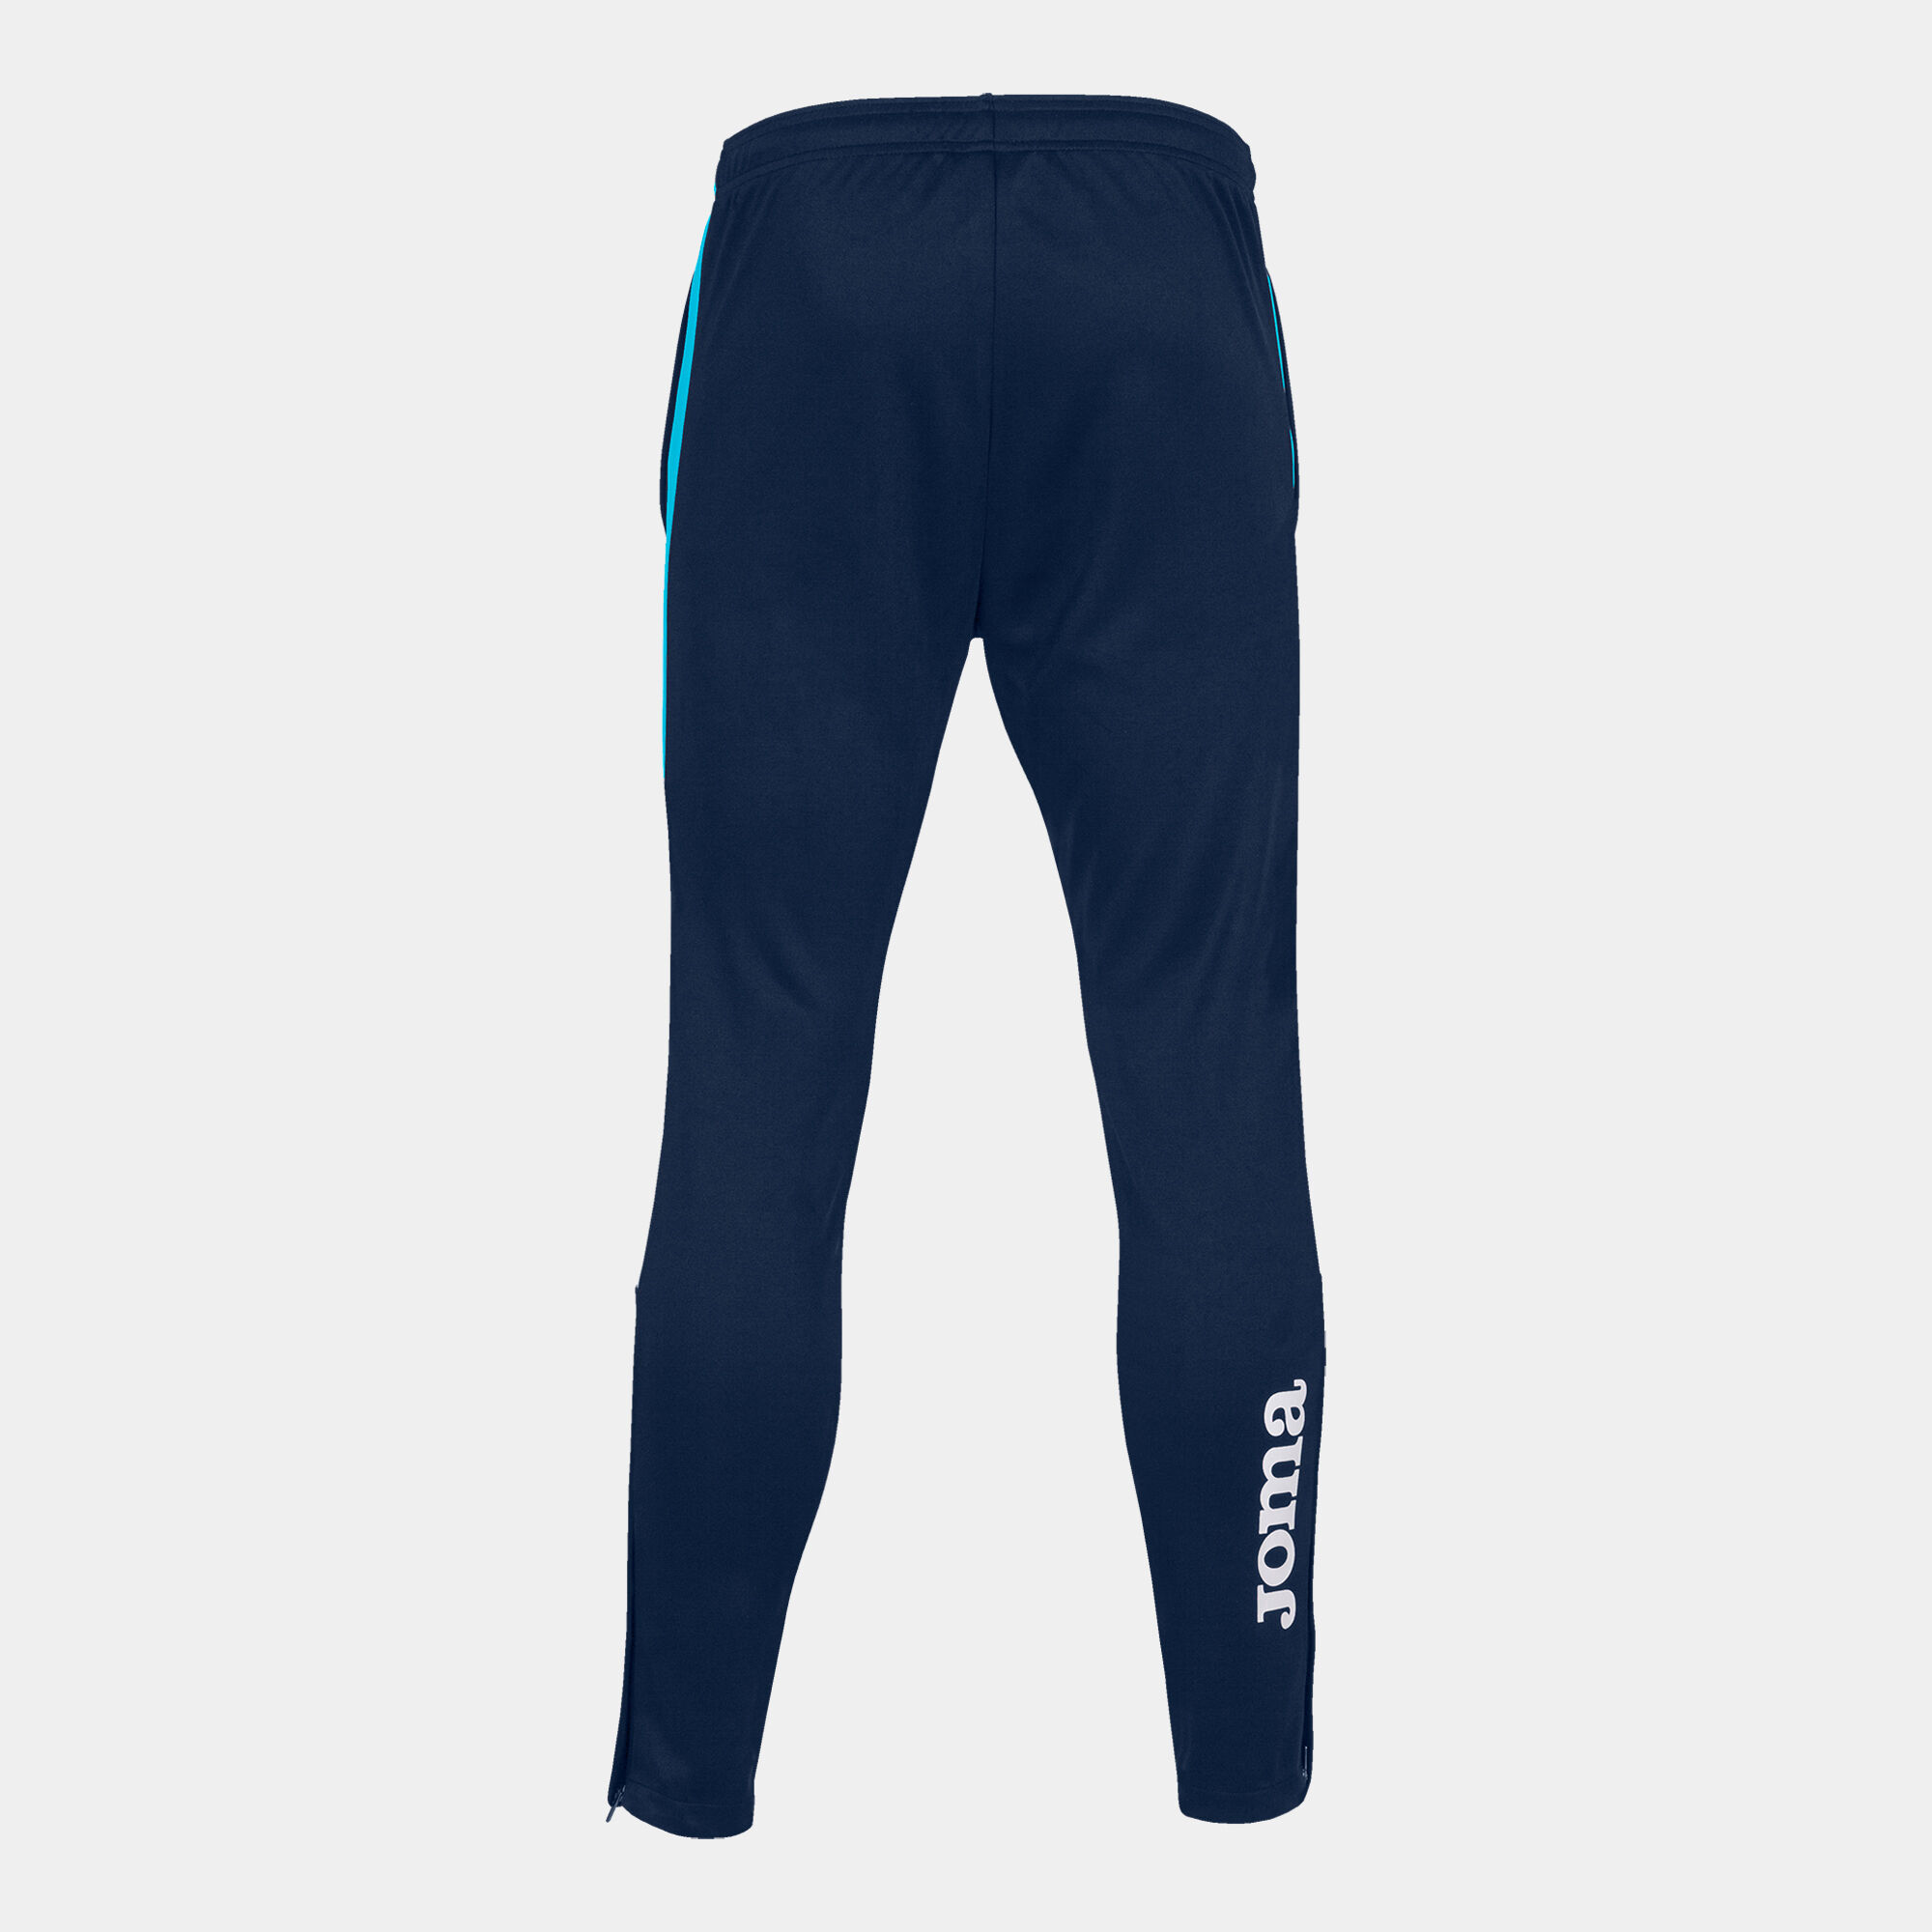 Longs pants man Eco Championship navy blue fluorescent turquoise